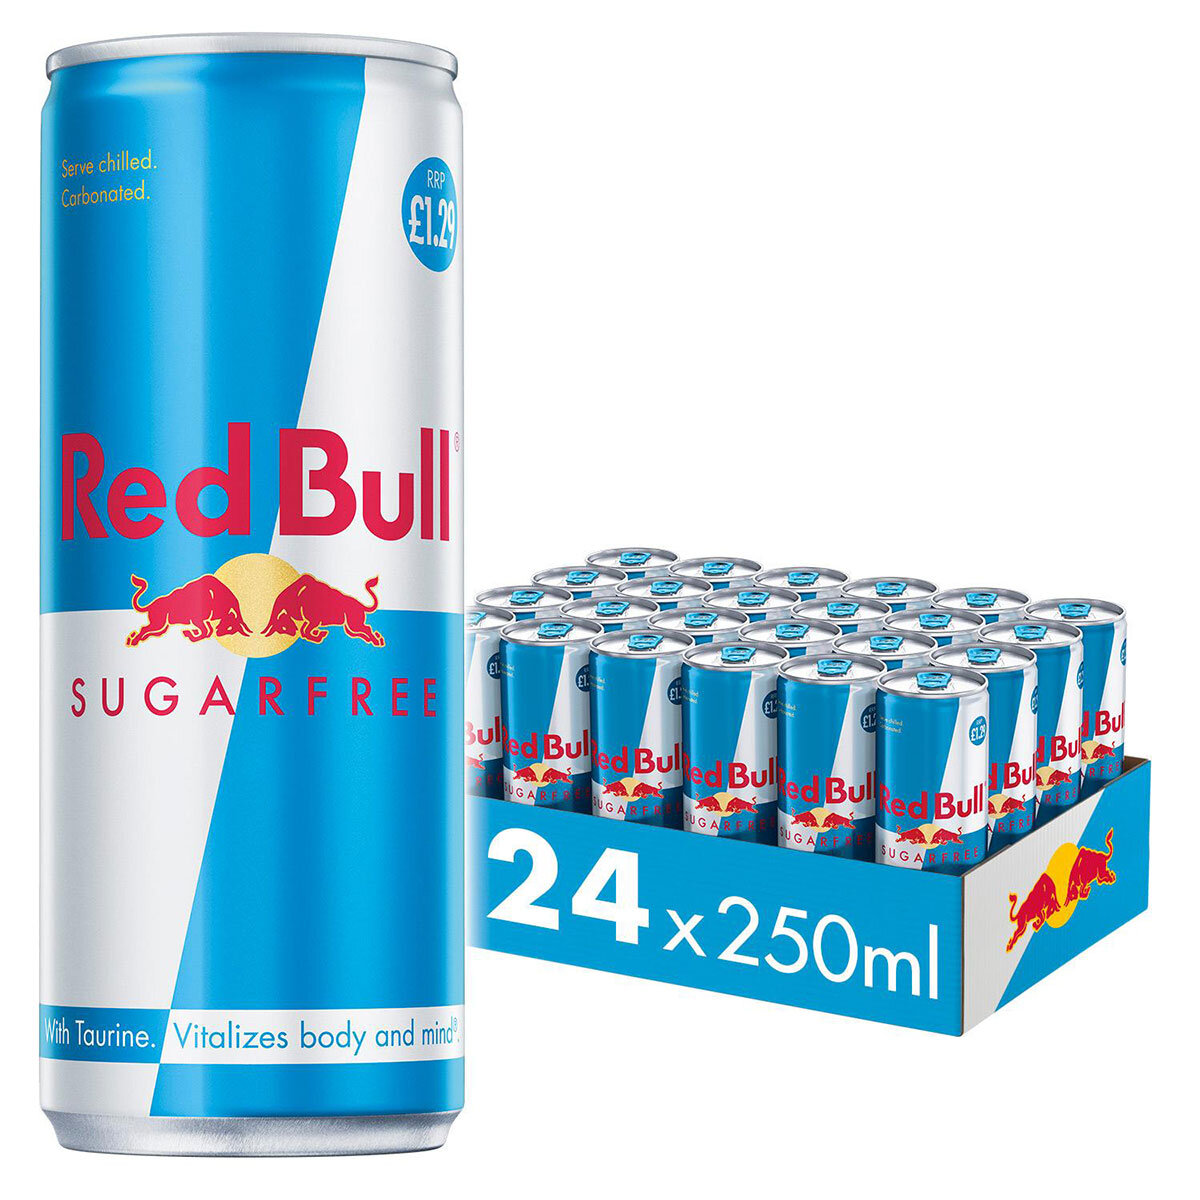 Farvel Svarende til specielt Red Bull Sugar Free PM £1.29, 24 x 250ml | Costco UK